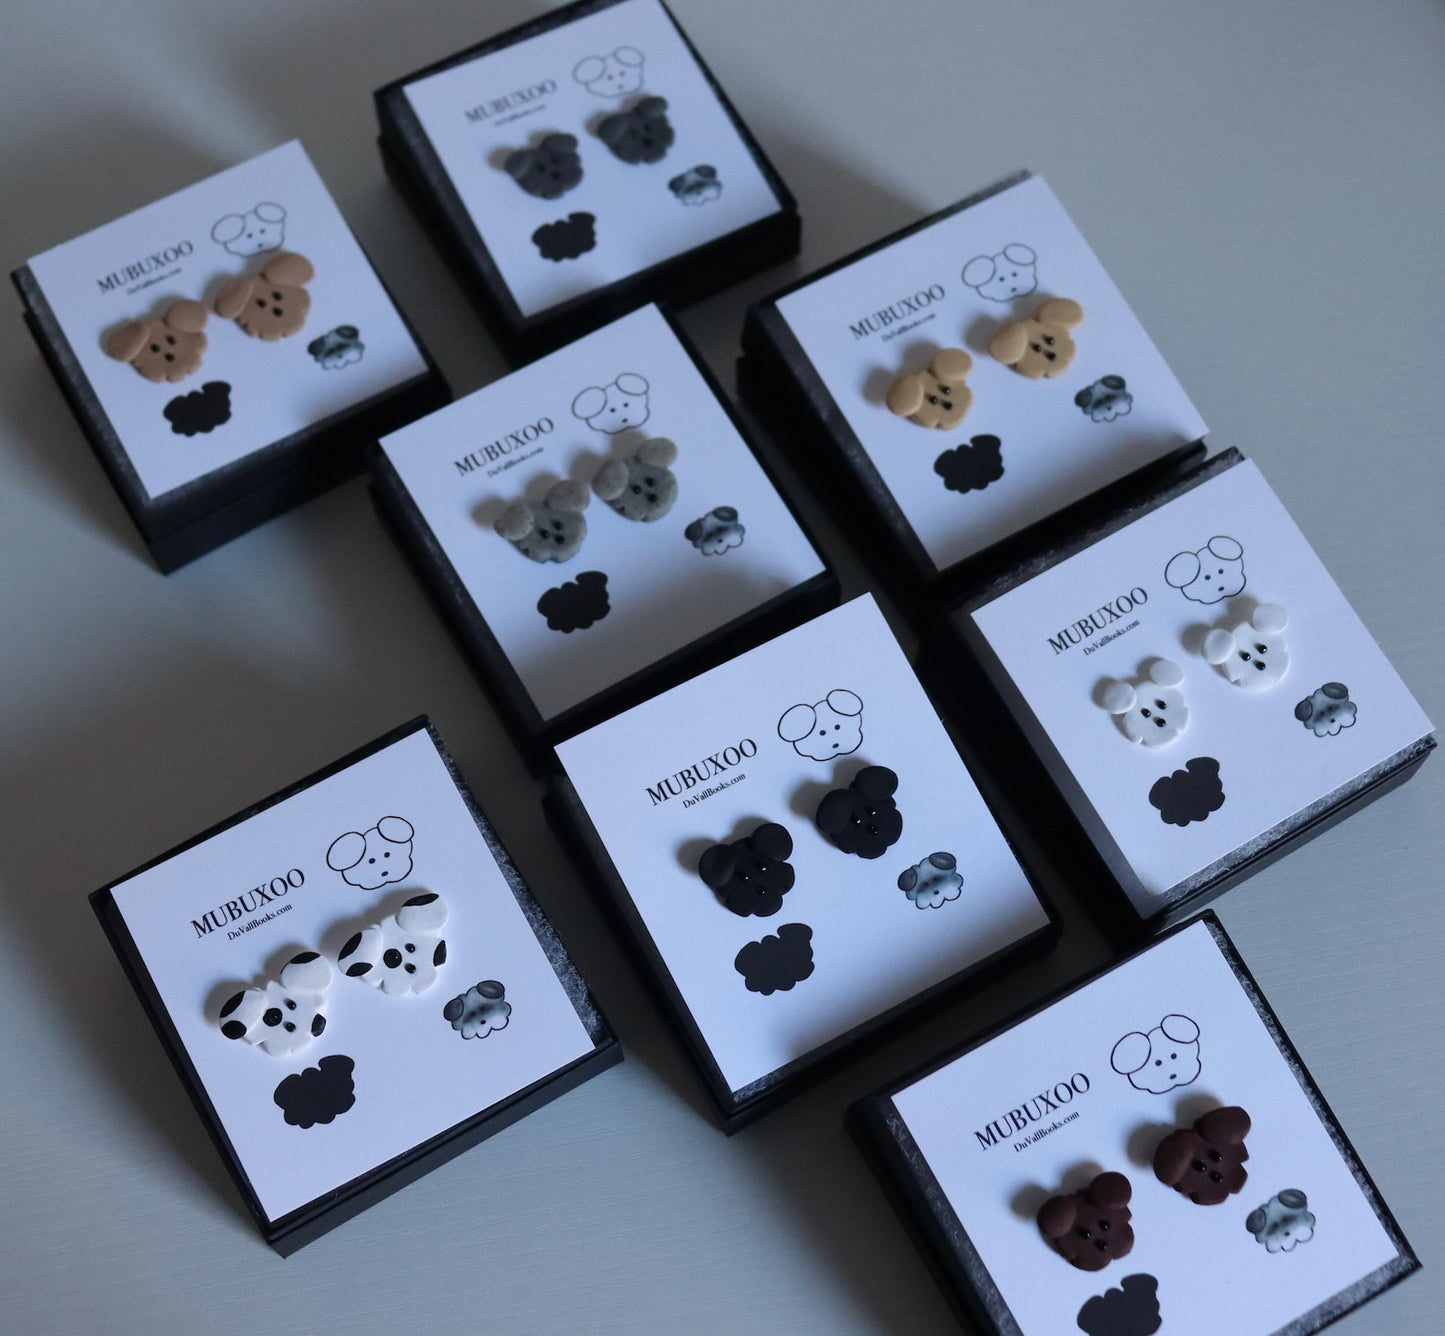 MUBUXOO Earrings - Handmade Clay Fluffy Dog Earrings